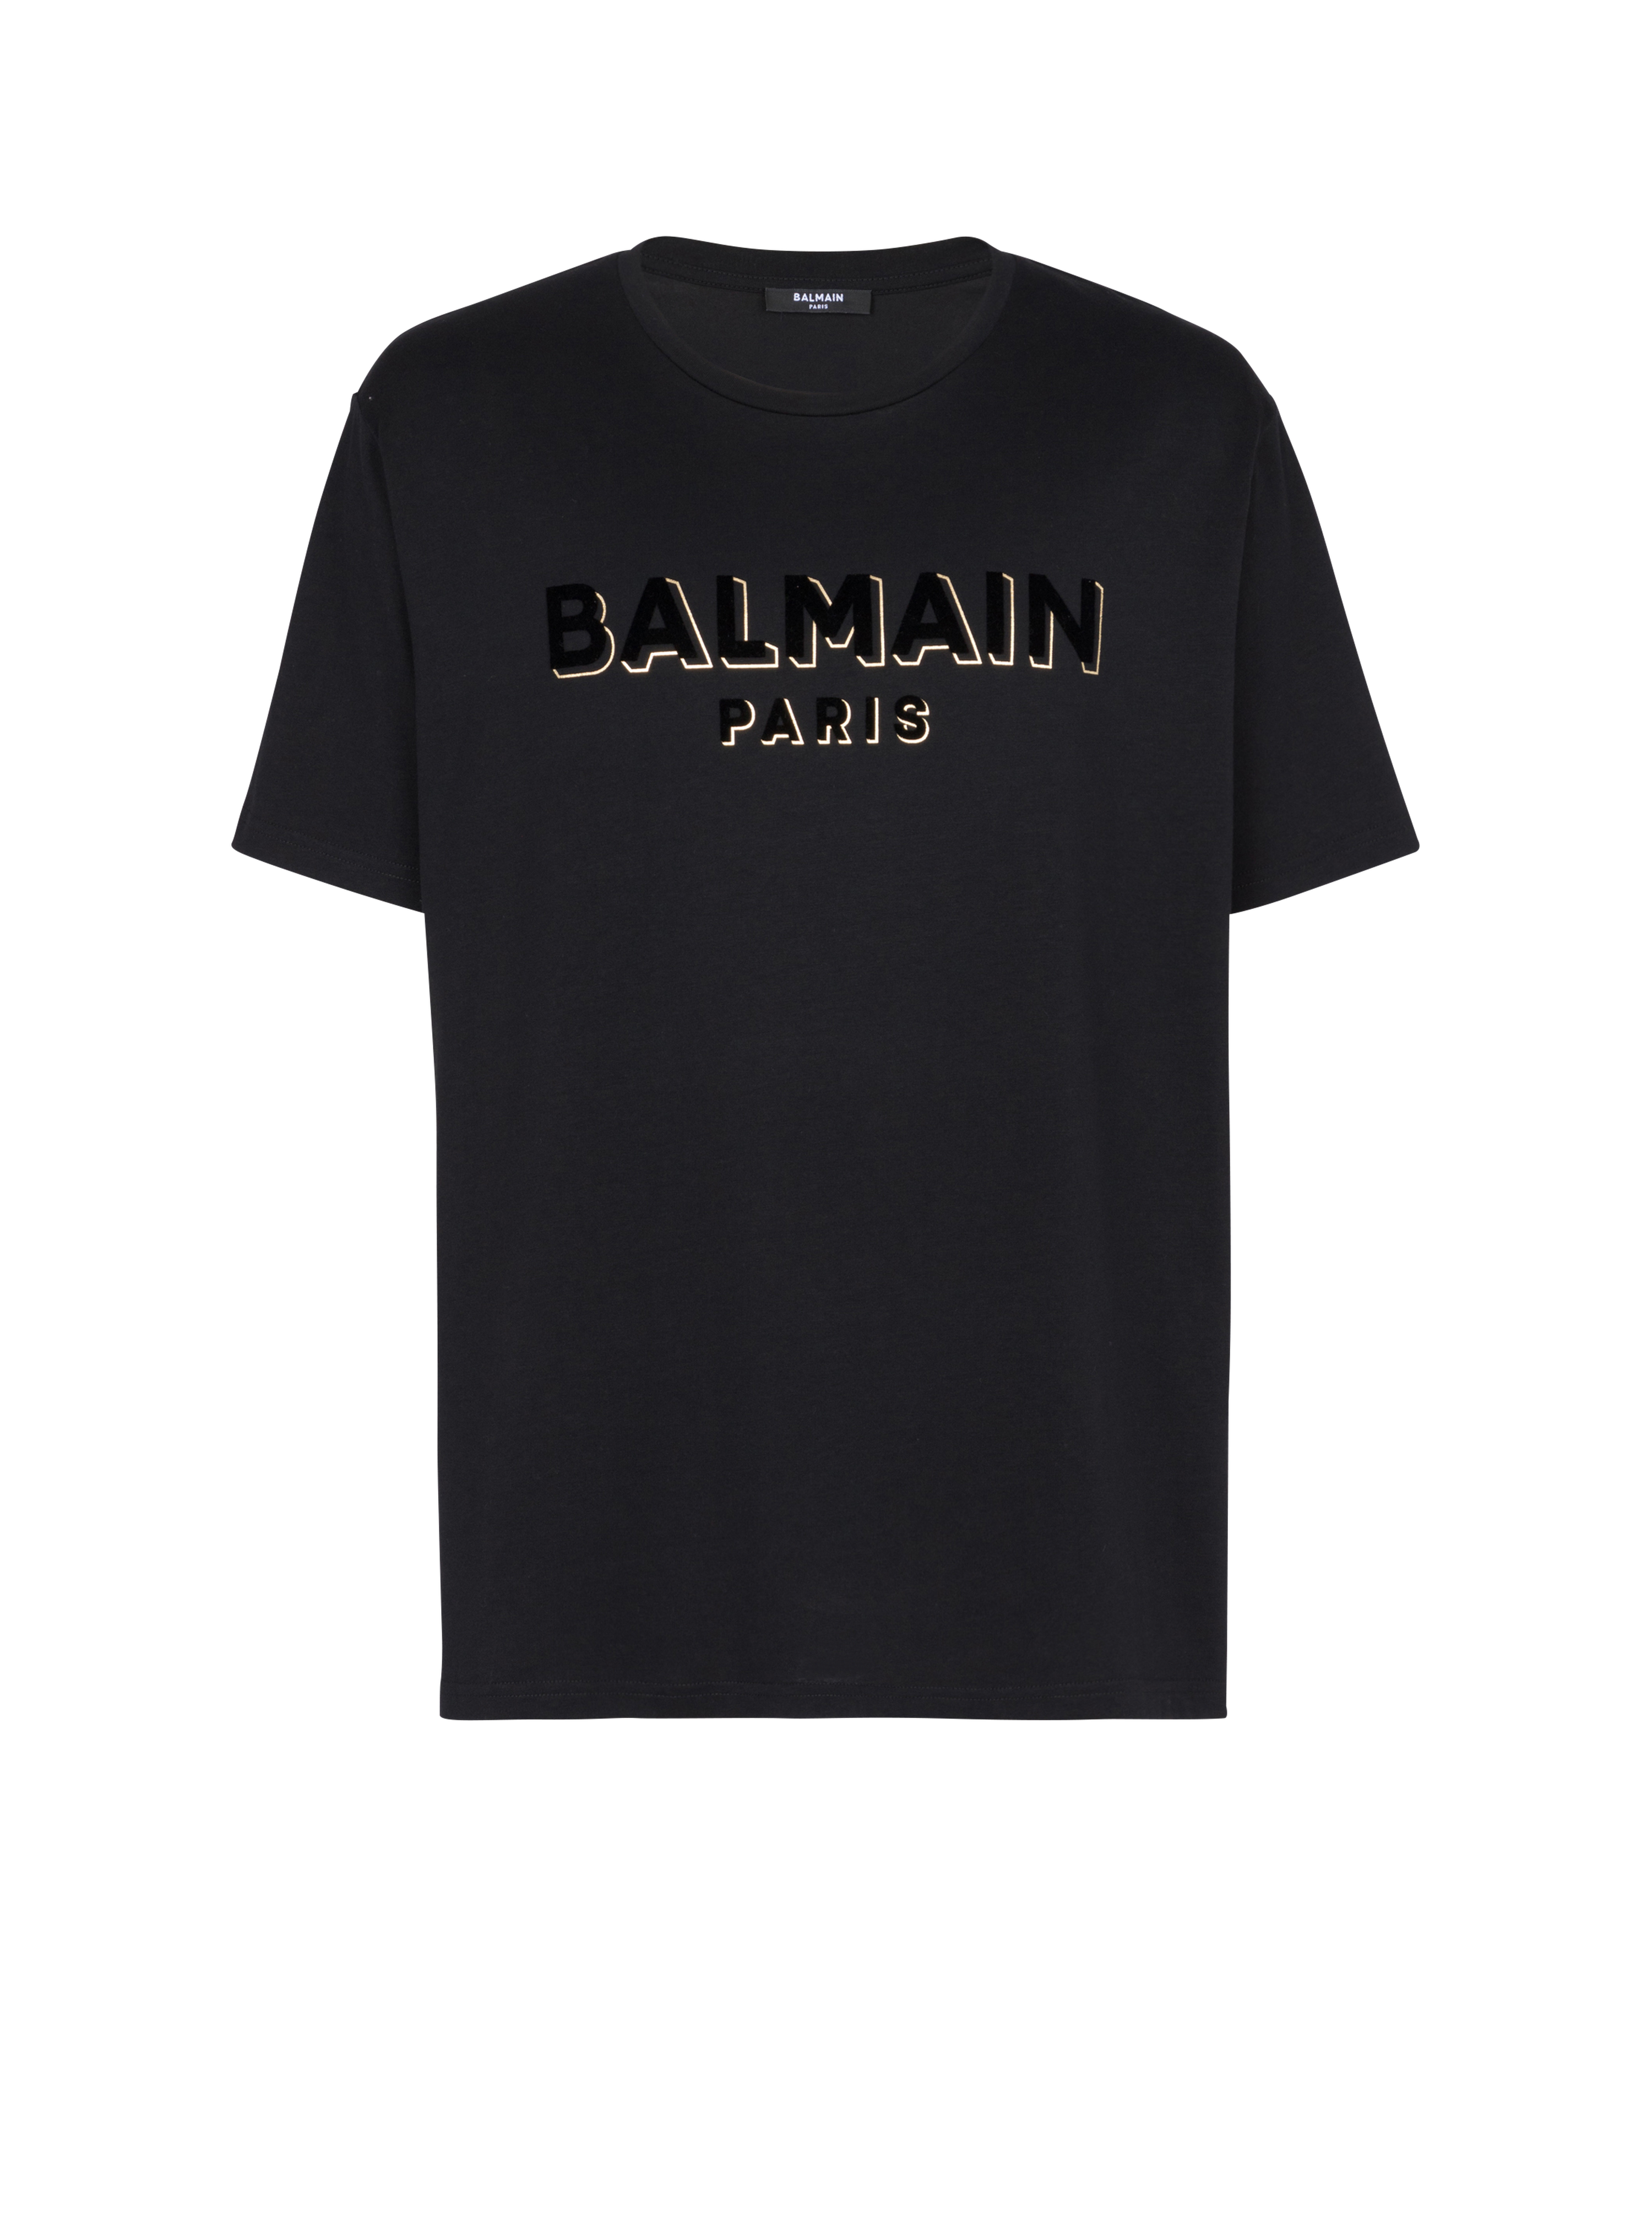 Balmain巴尔曼标志纹理棉质T恤, black